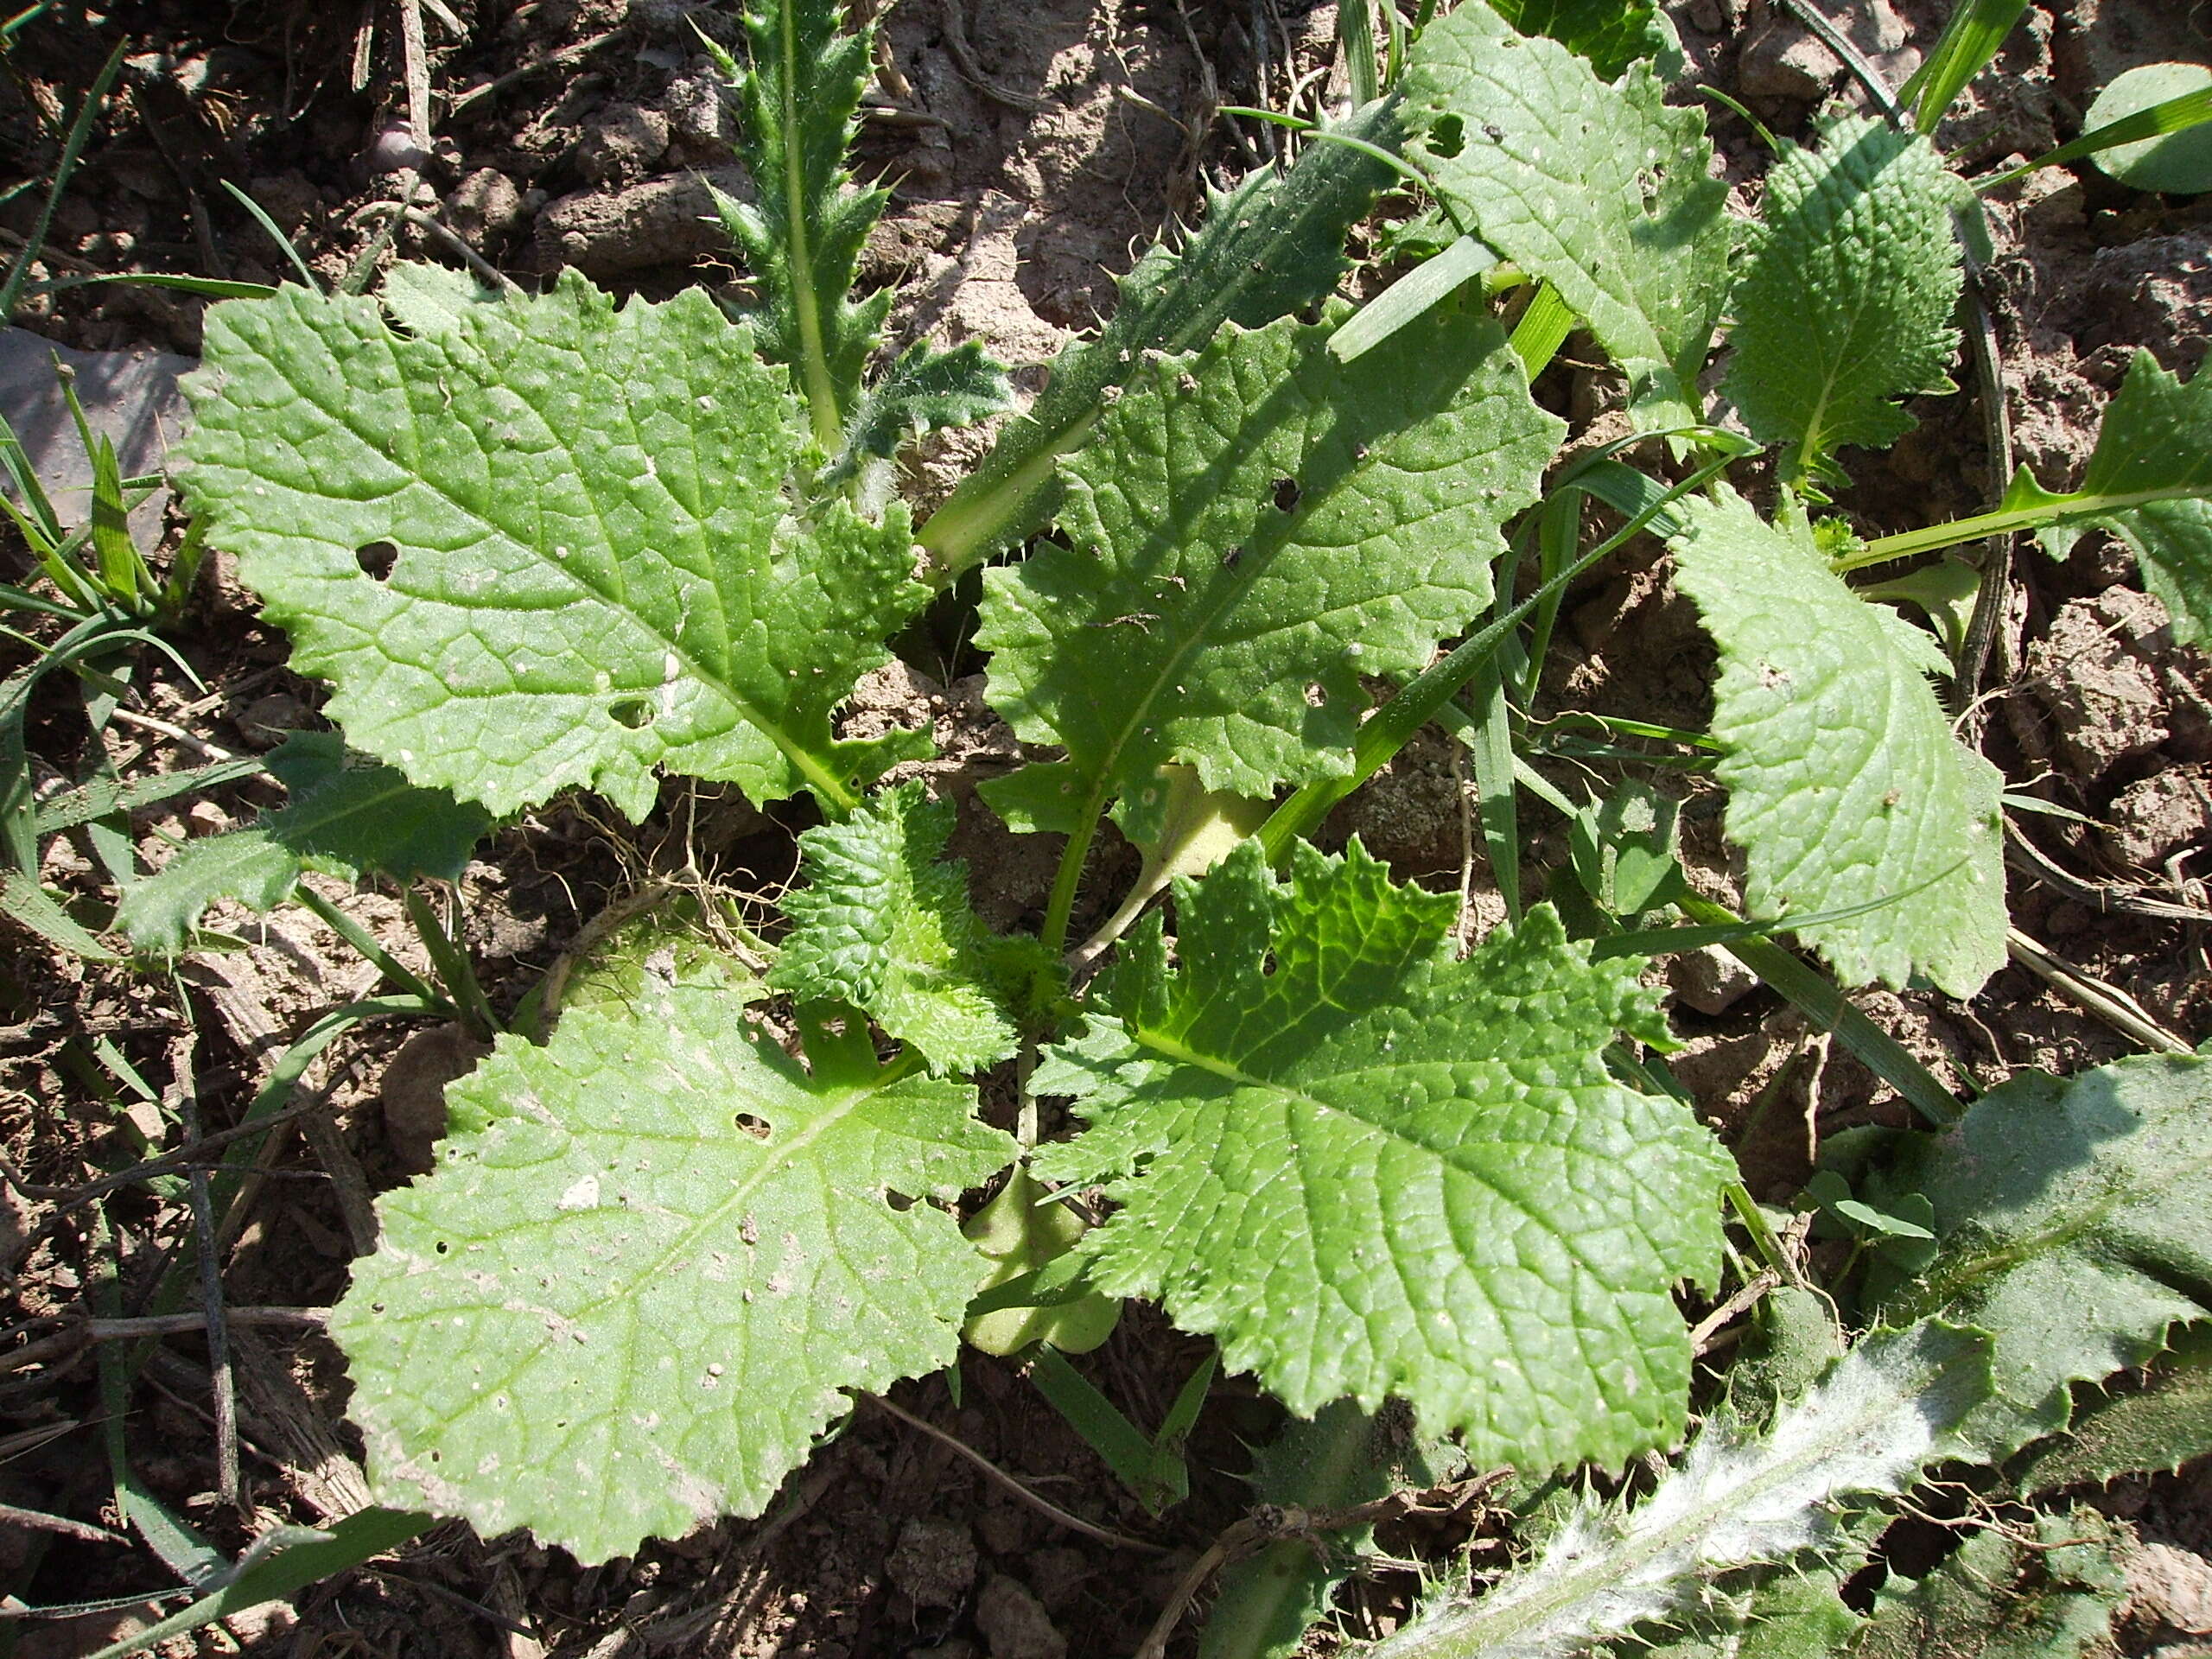 Image of Brassica ruvo